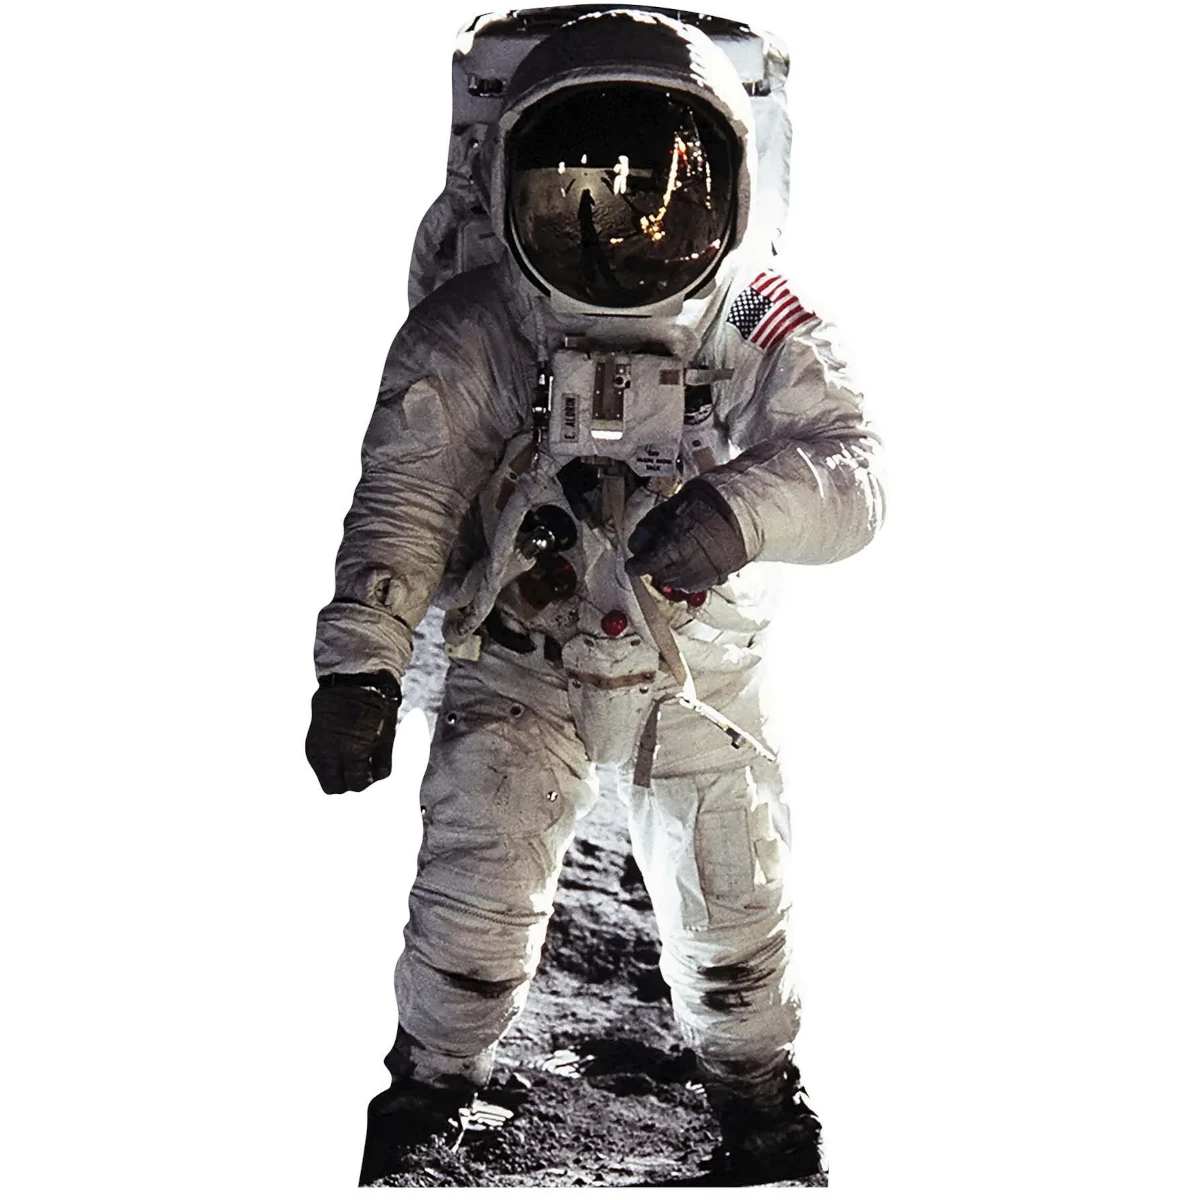 SC119 Buzz Aldrin 'Moon Landing' (American Former Astronaut) Lifesize Cardboard Cutout Standee Front